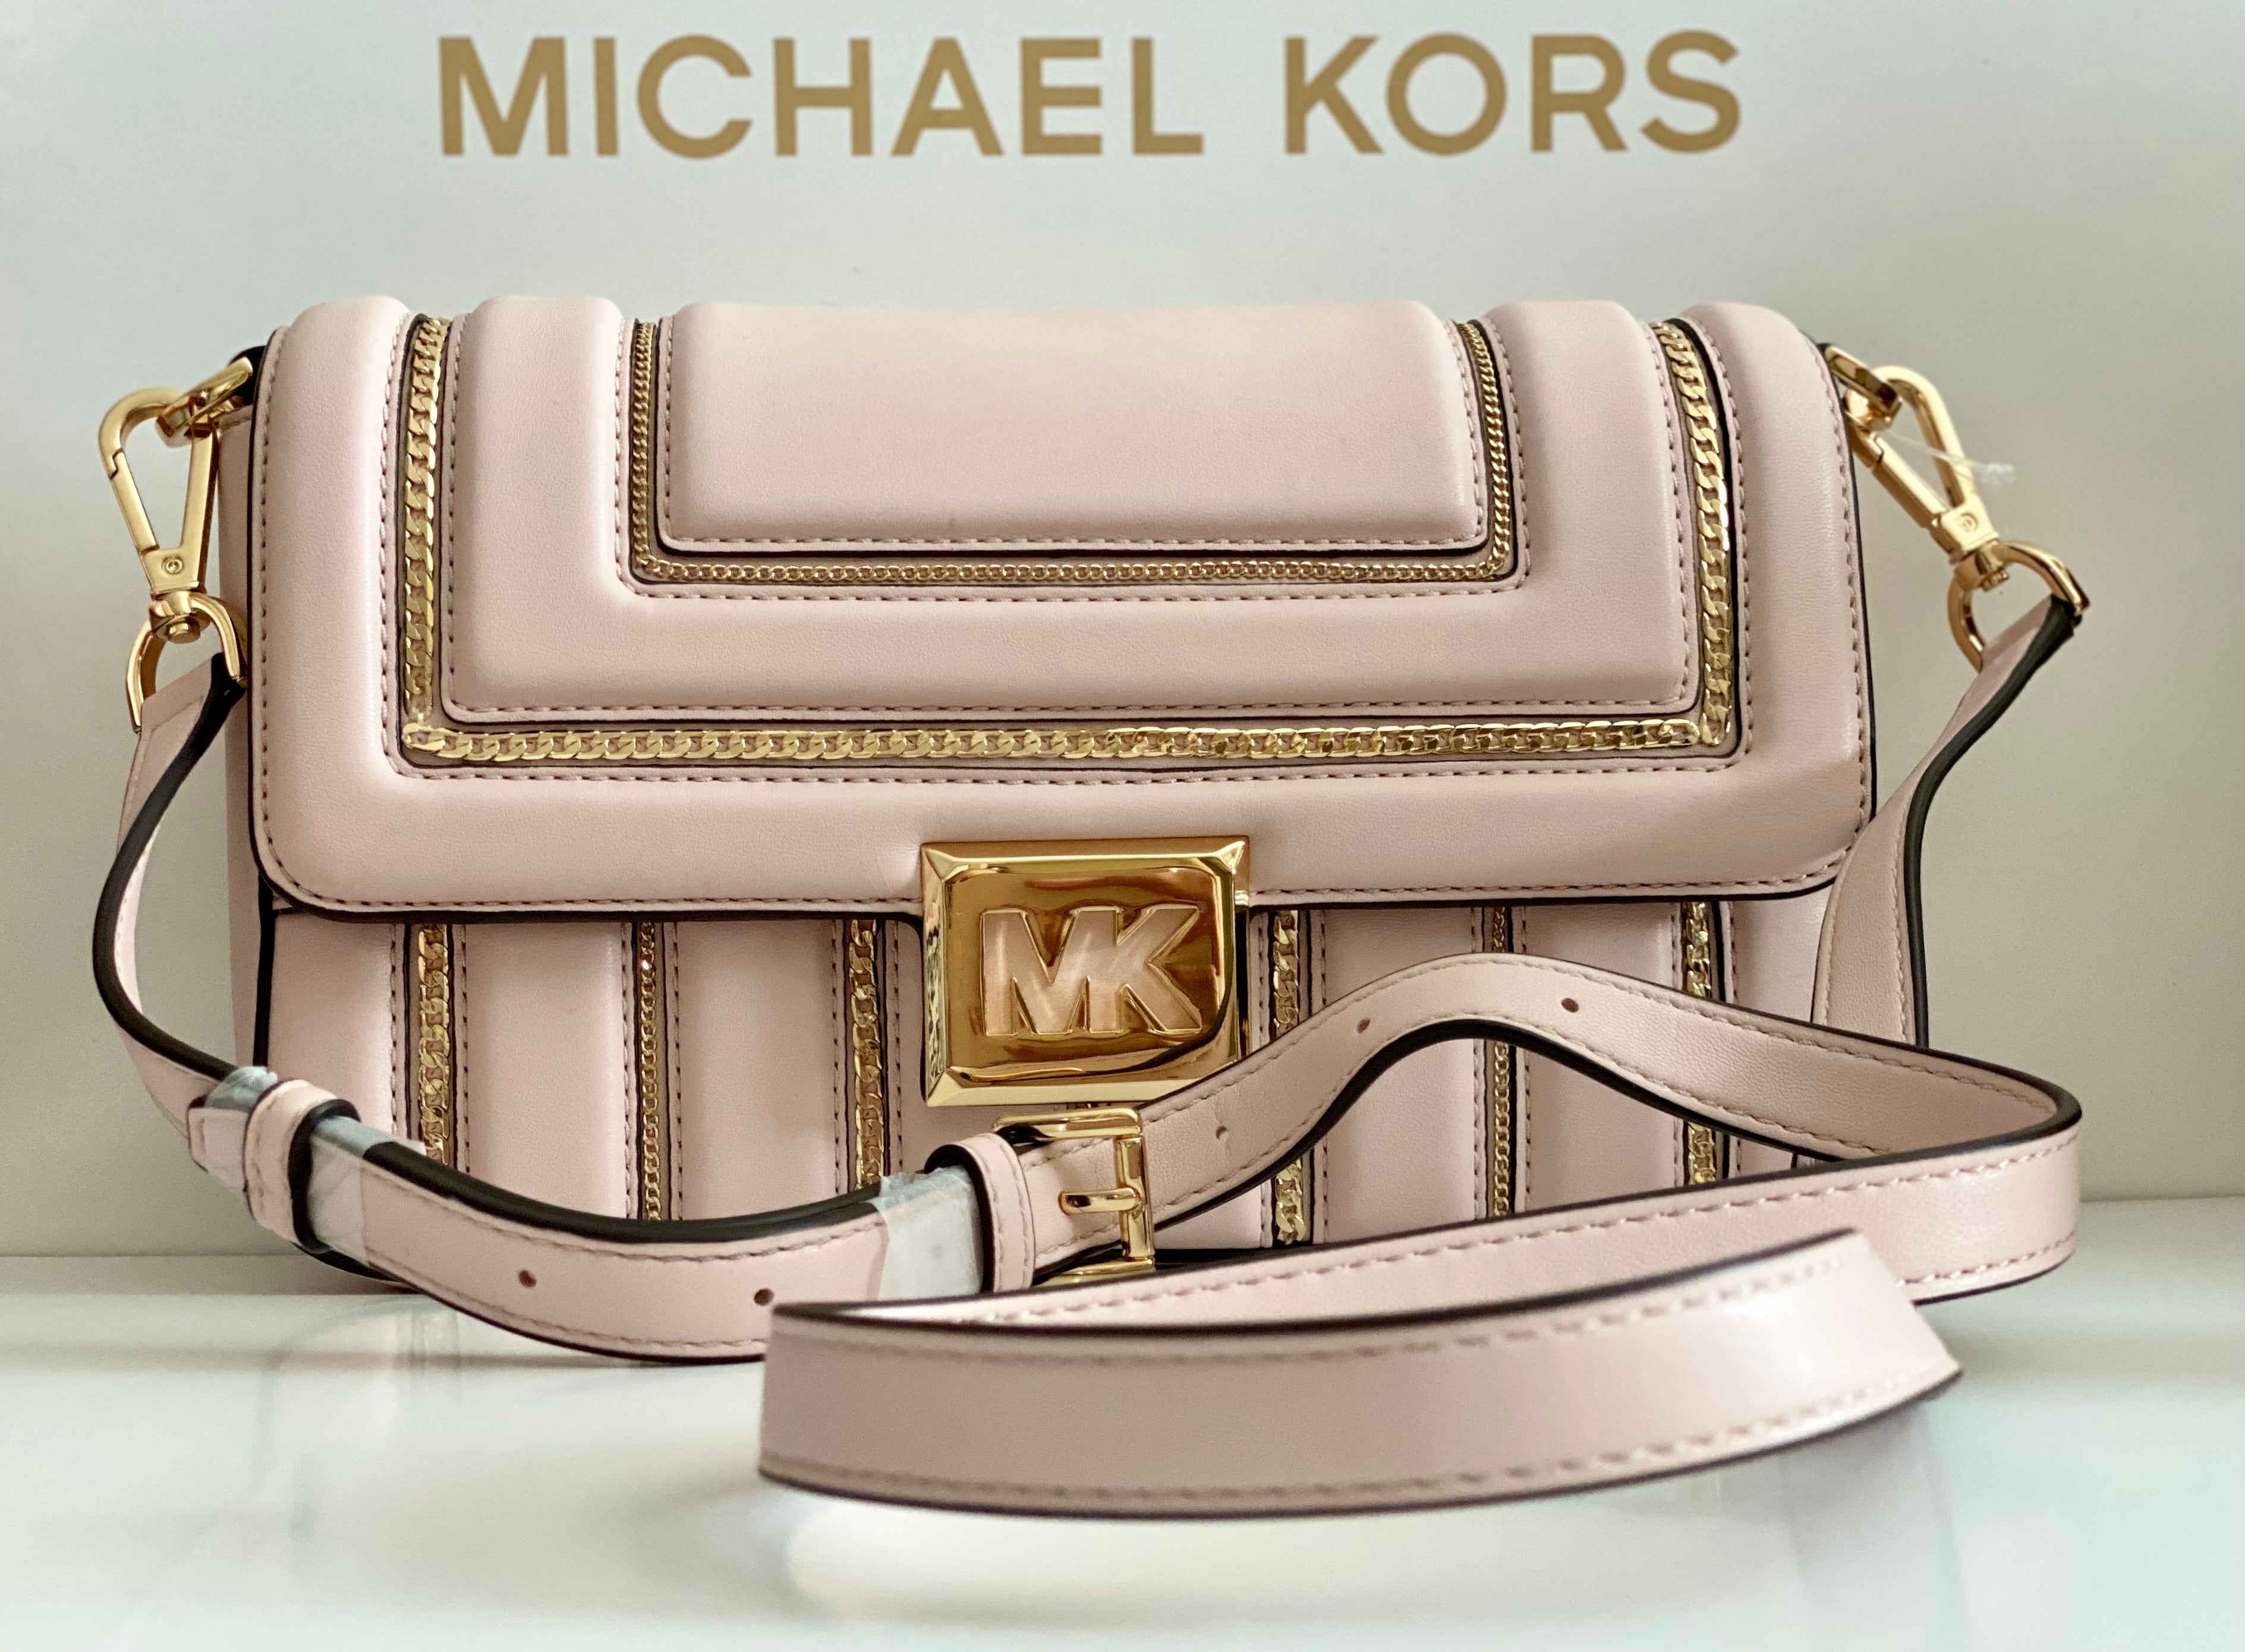 Michael Kors Small Sonia Square Crossbody Bag at Luxe Purses